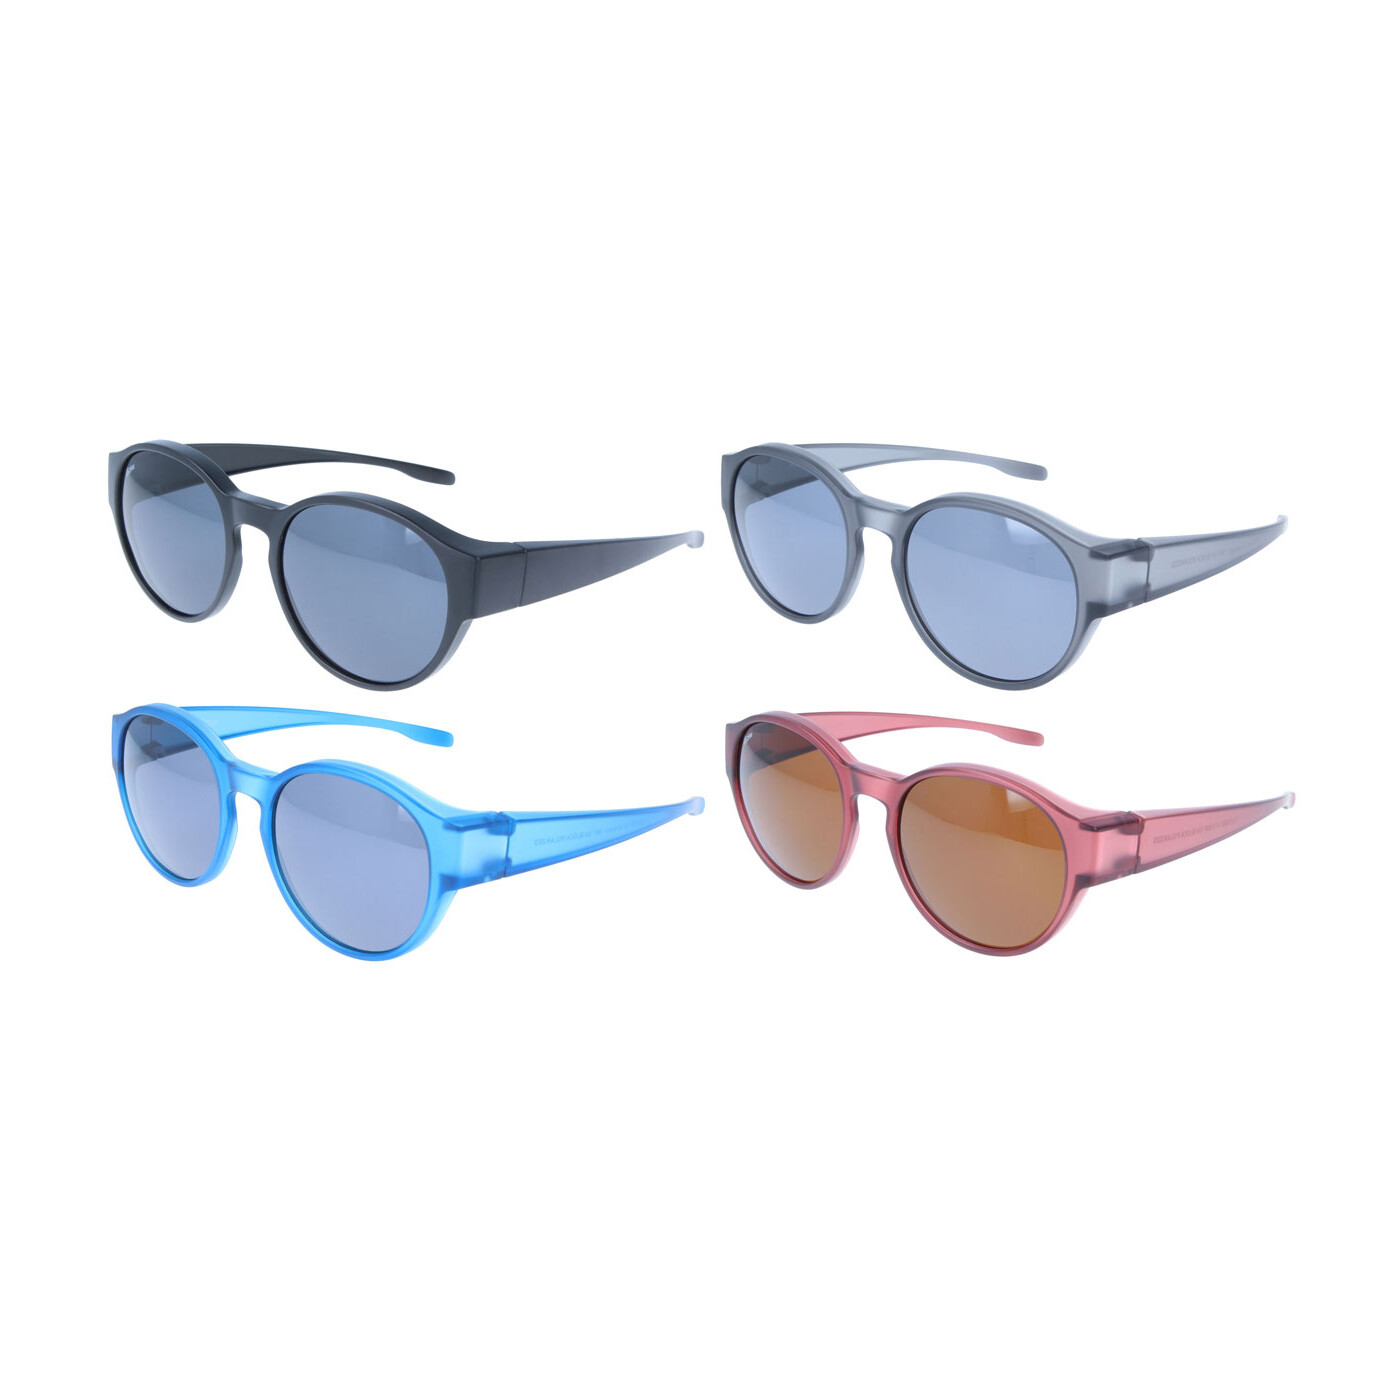 Sonnenbrille in acht coolen Farben 100% UV 400 Protection 